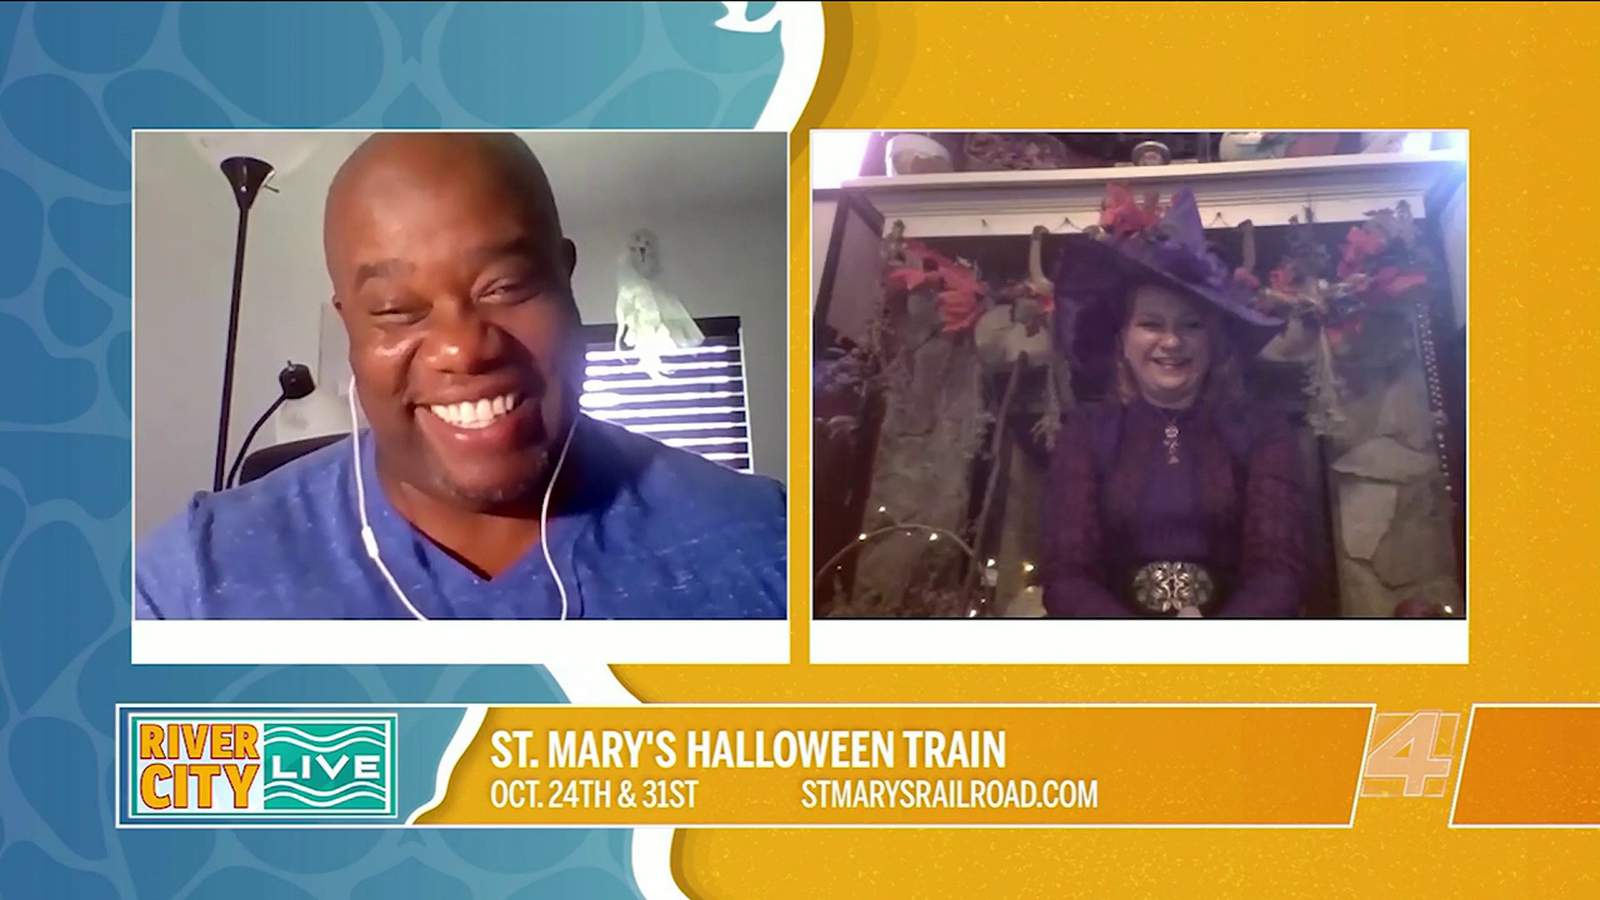 St. Mary’s Halloween Train | River City Live